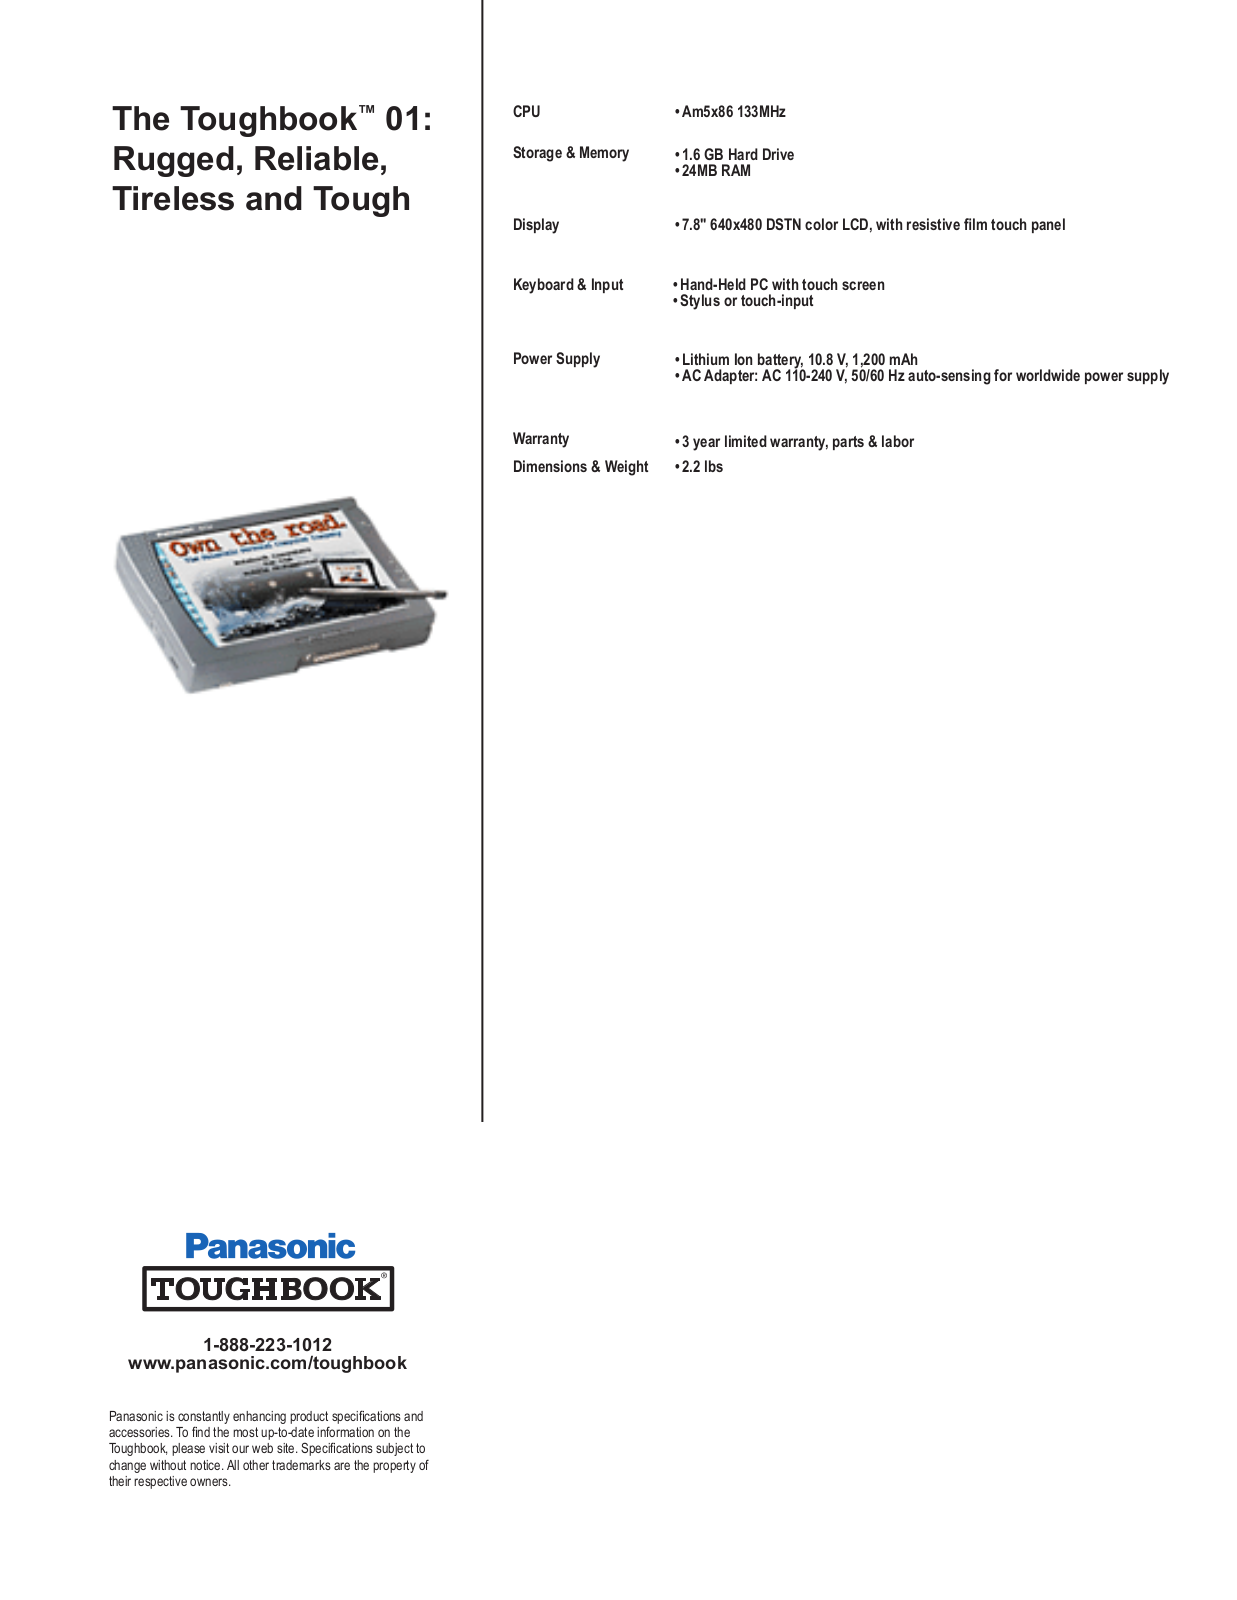 Panasonic Toughbook 01 User Manual